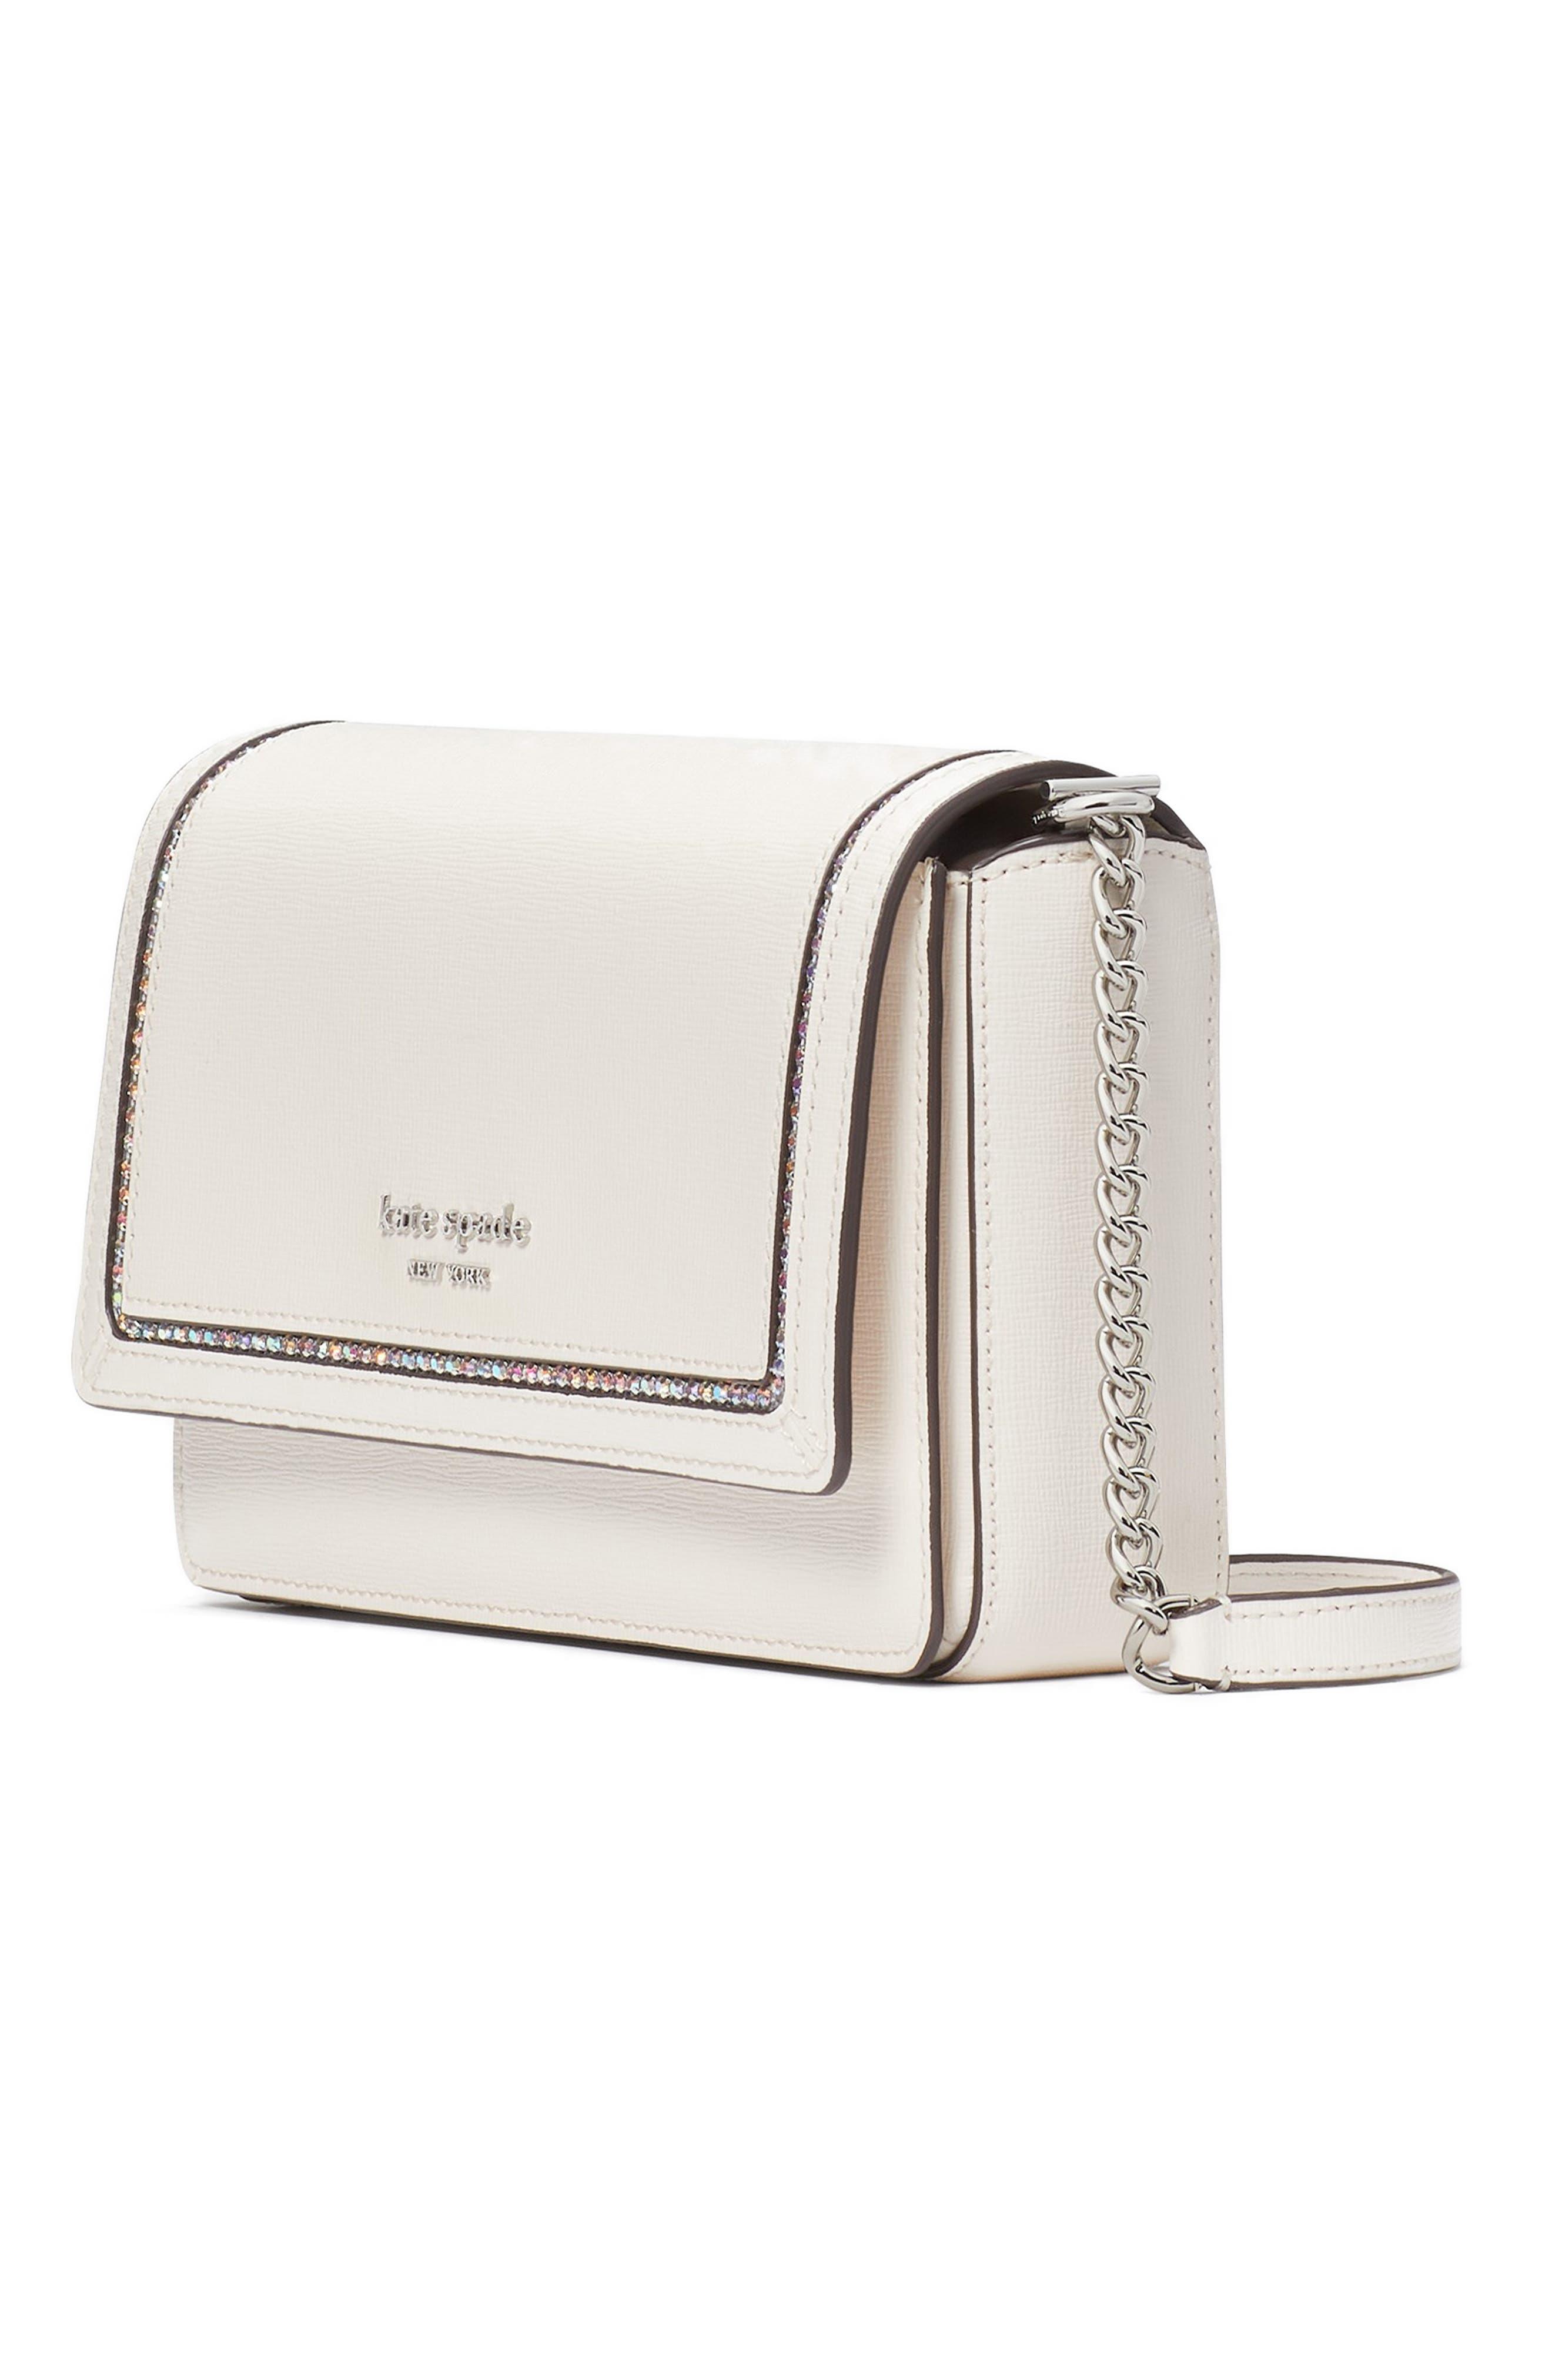 Kate Spade New York Staci small flap crossbody bag (Parchment): Handbags